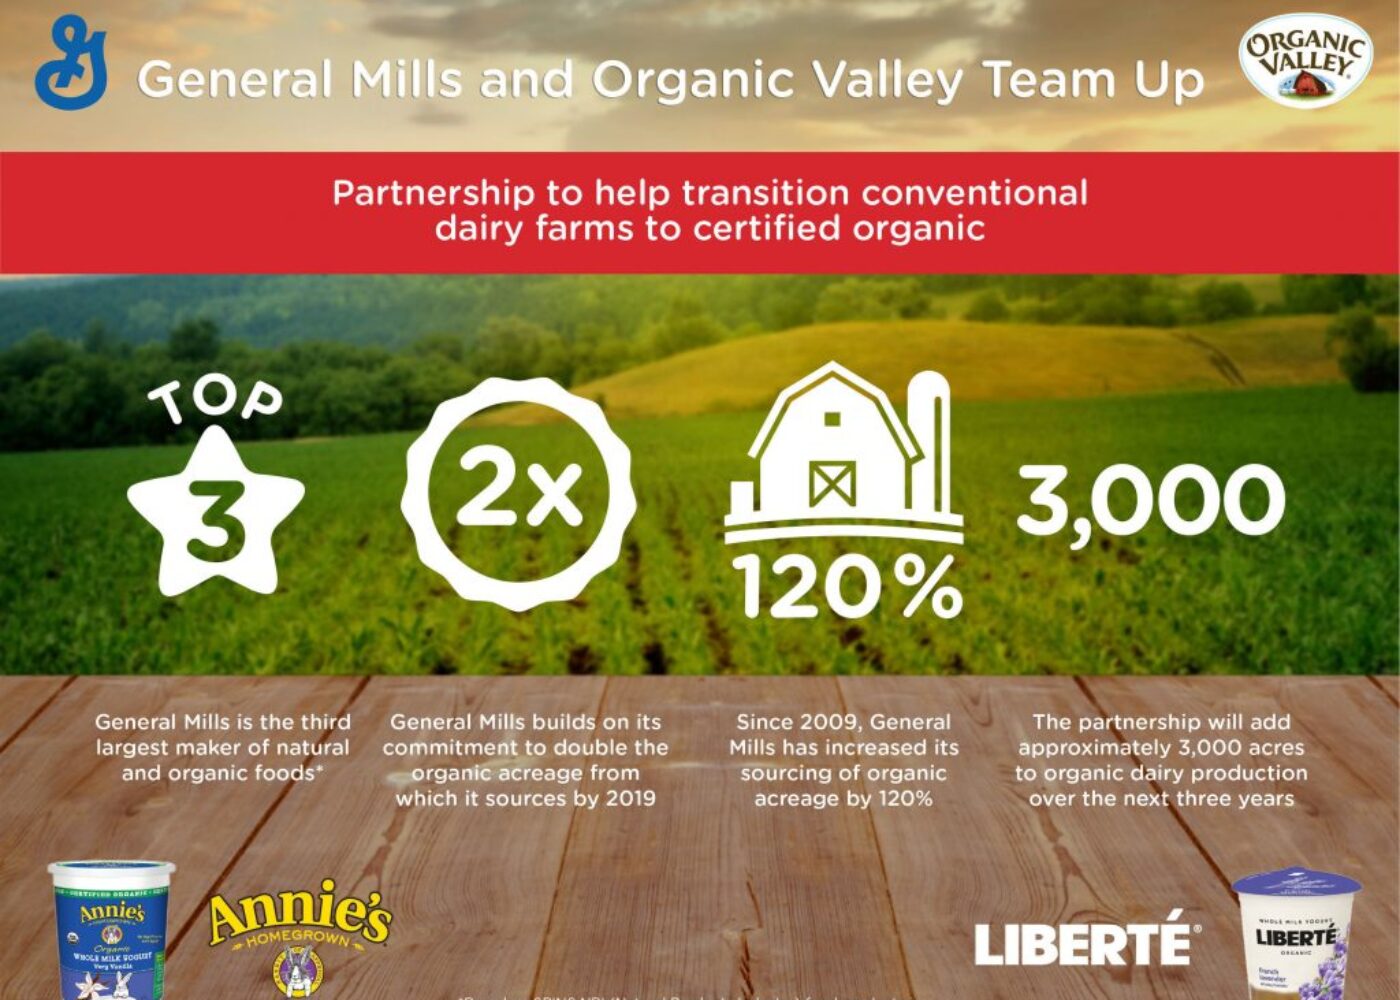 General Mills Organic Yogurt Infographic